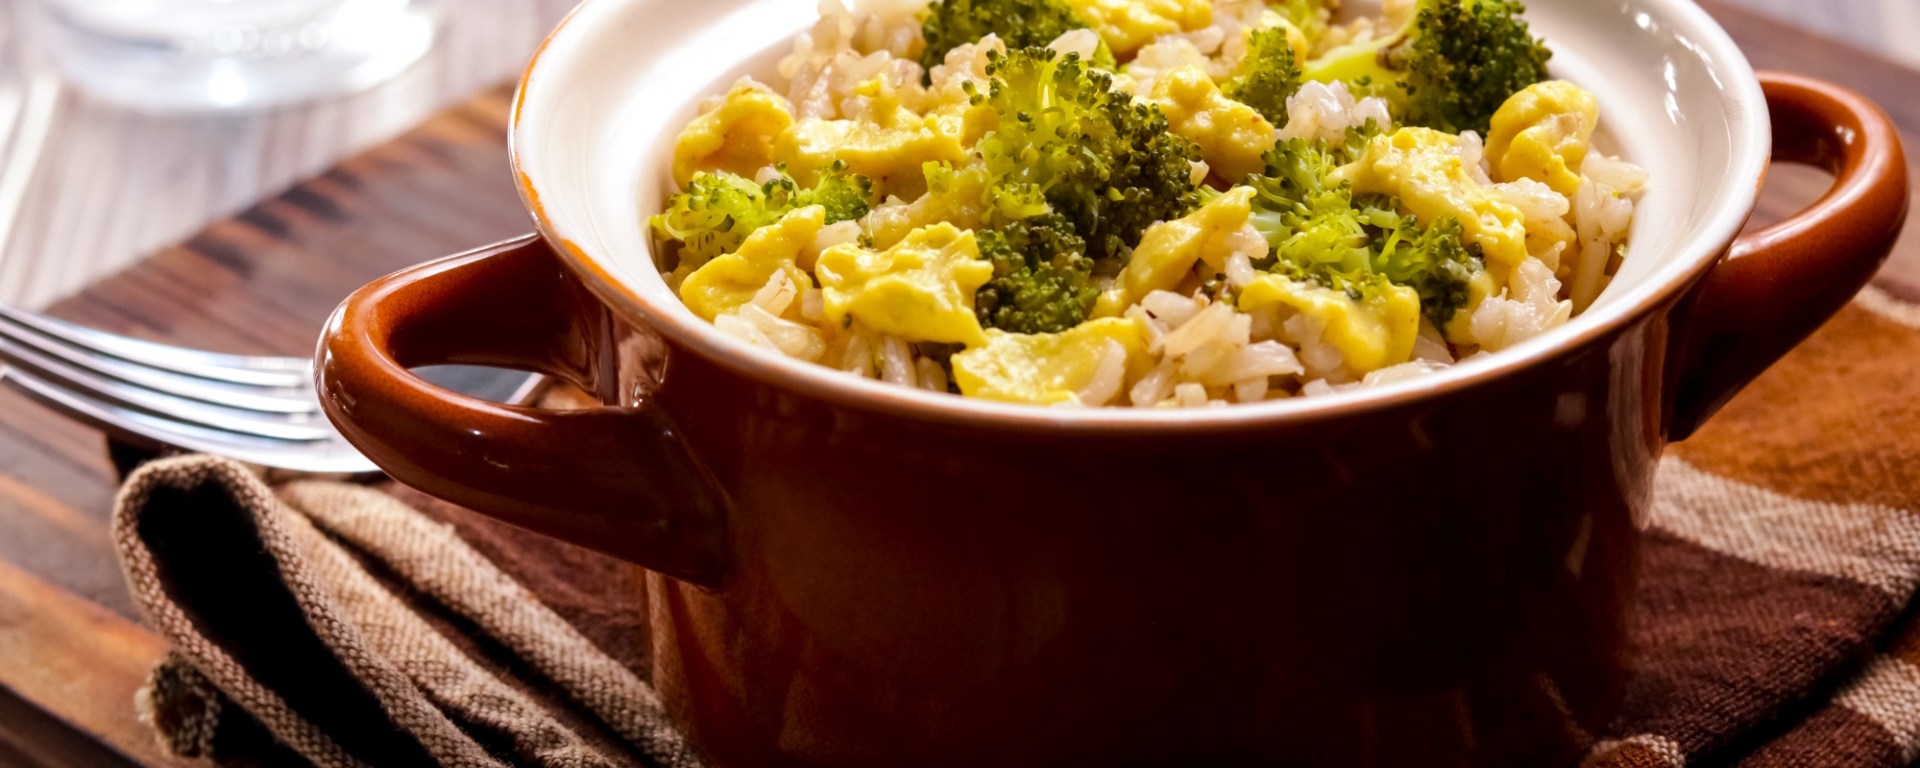 LuvMyRecipe.com - Vegan-Cheesy-Broccoli Featured